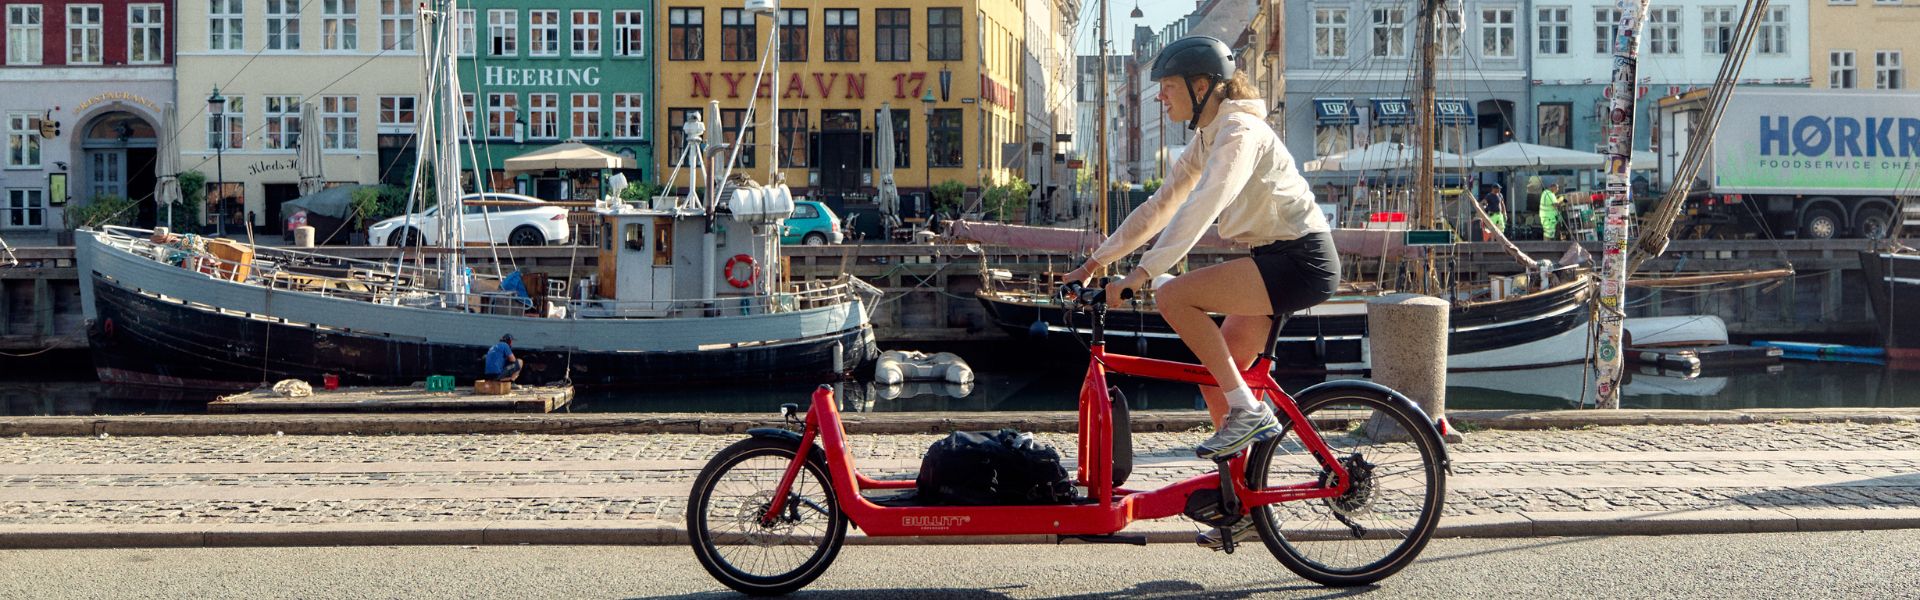 København - Cykling i byen